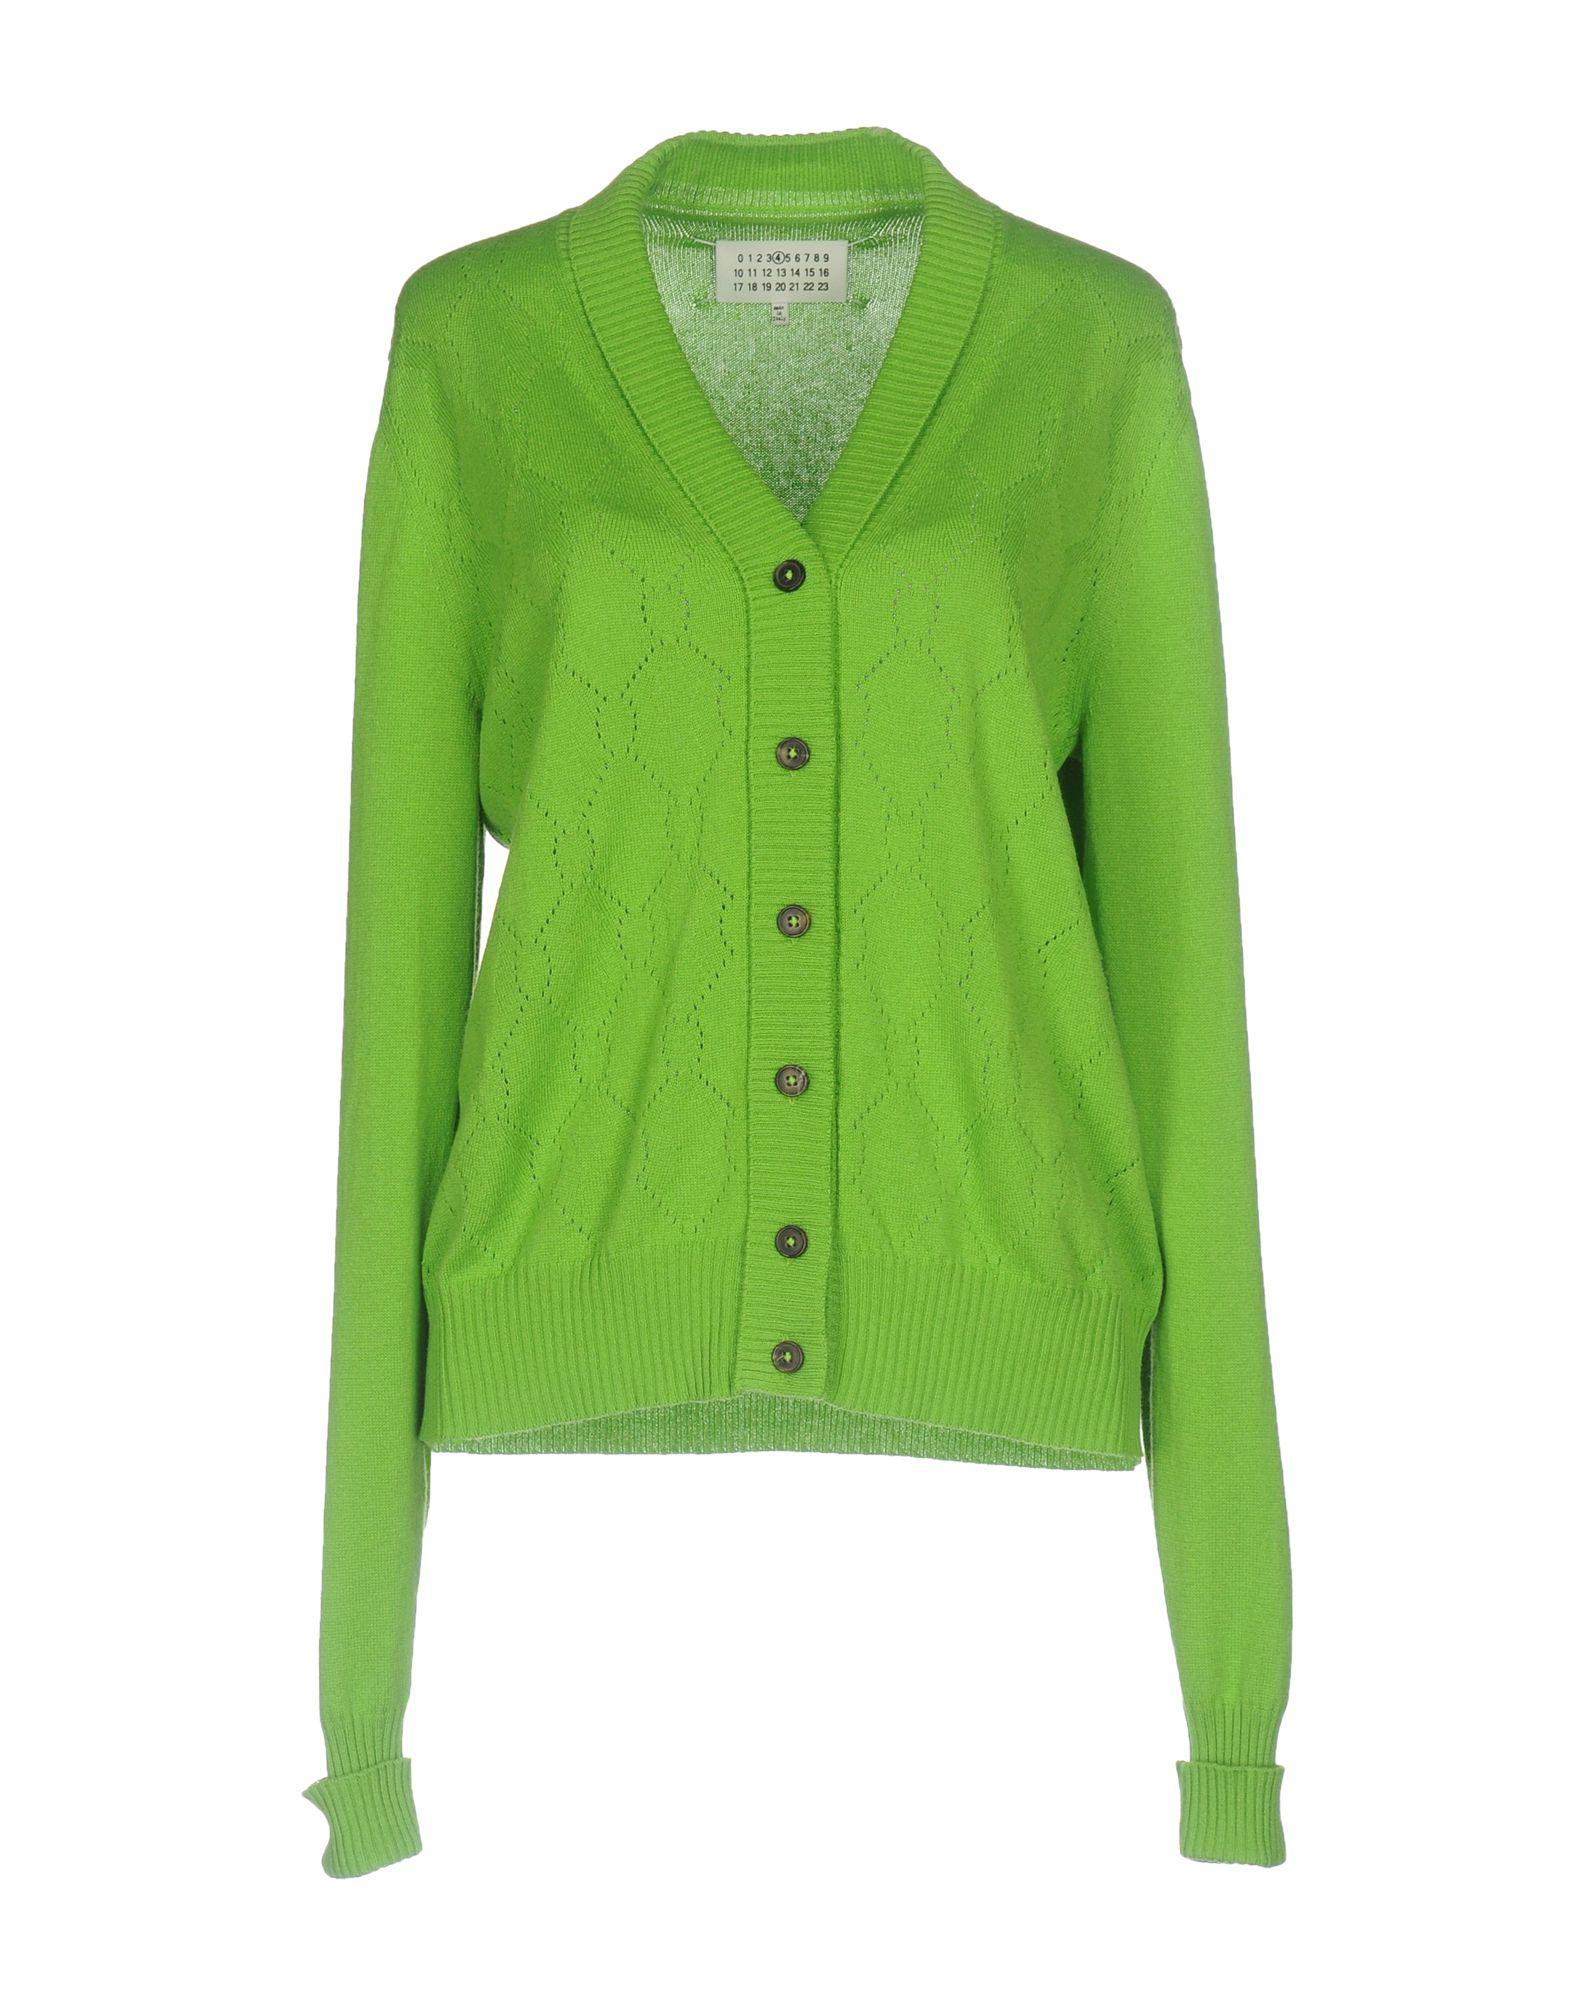 Maison Margiela Cotton Cardigan in Light Green (Green) - Lyst